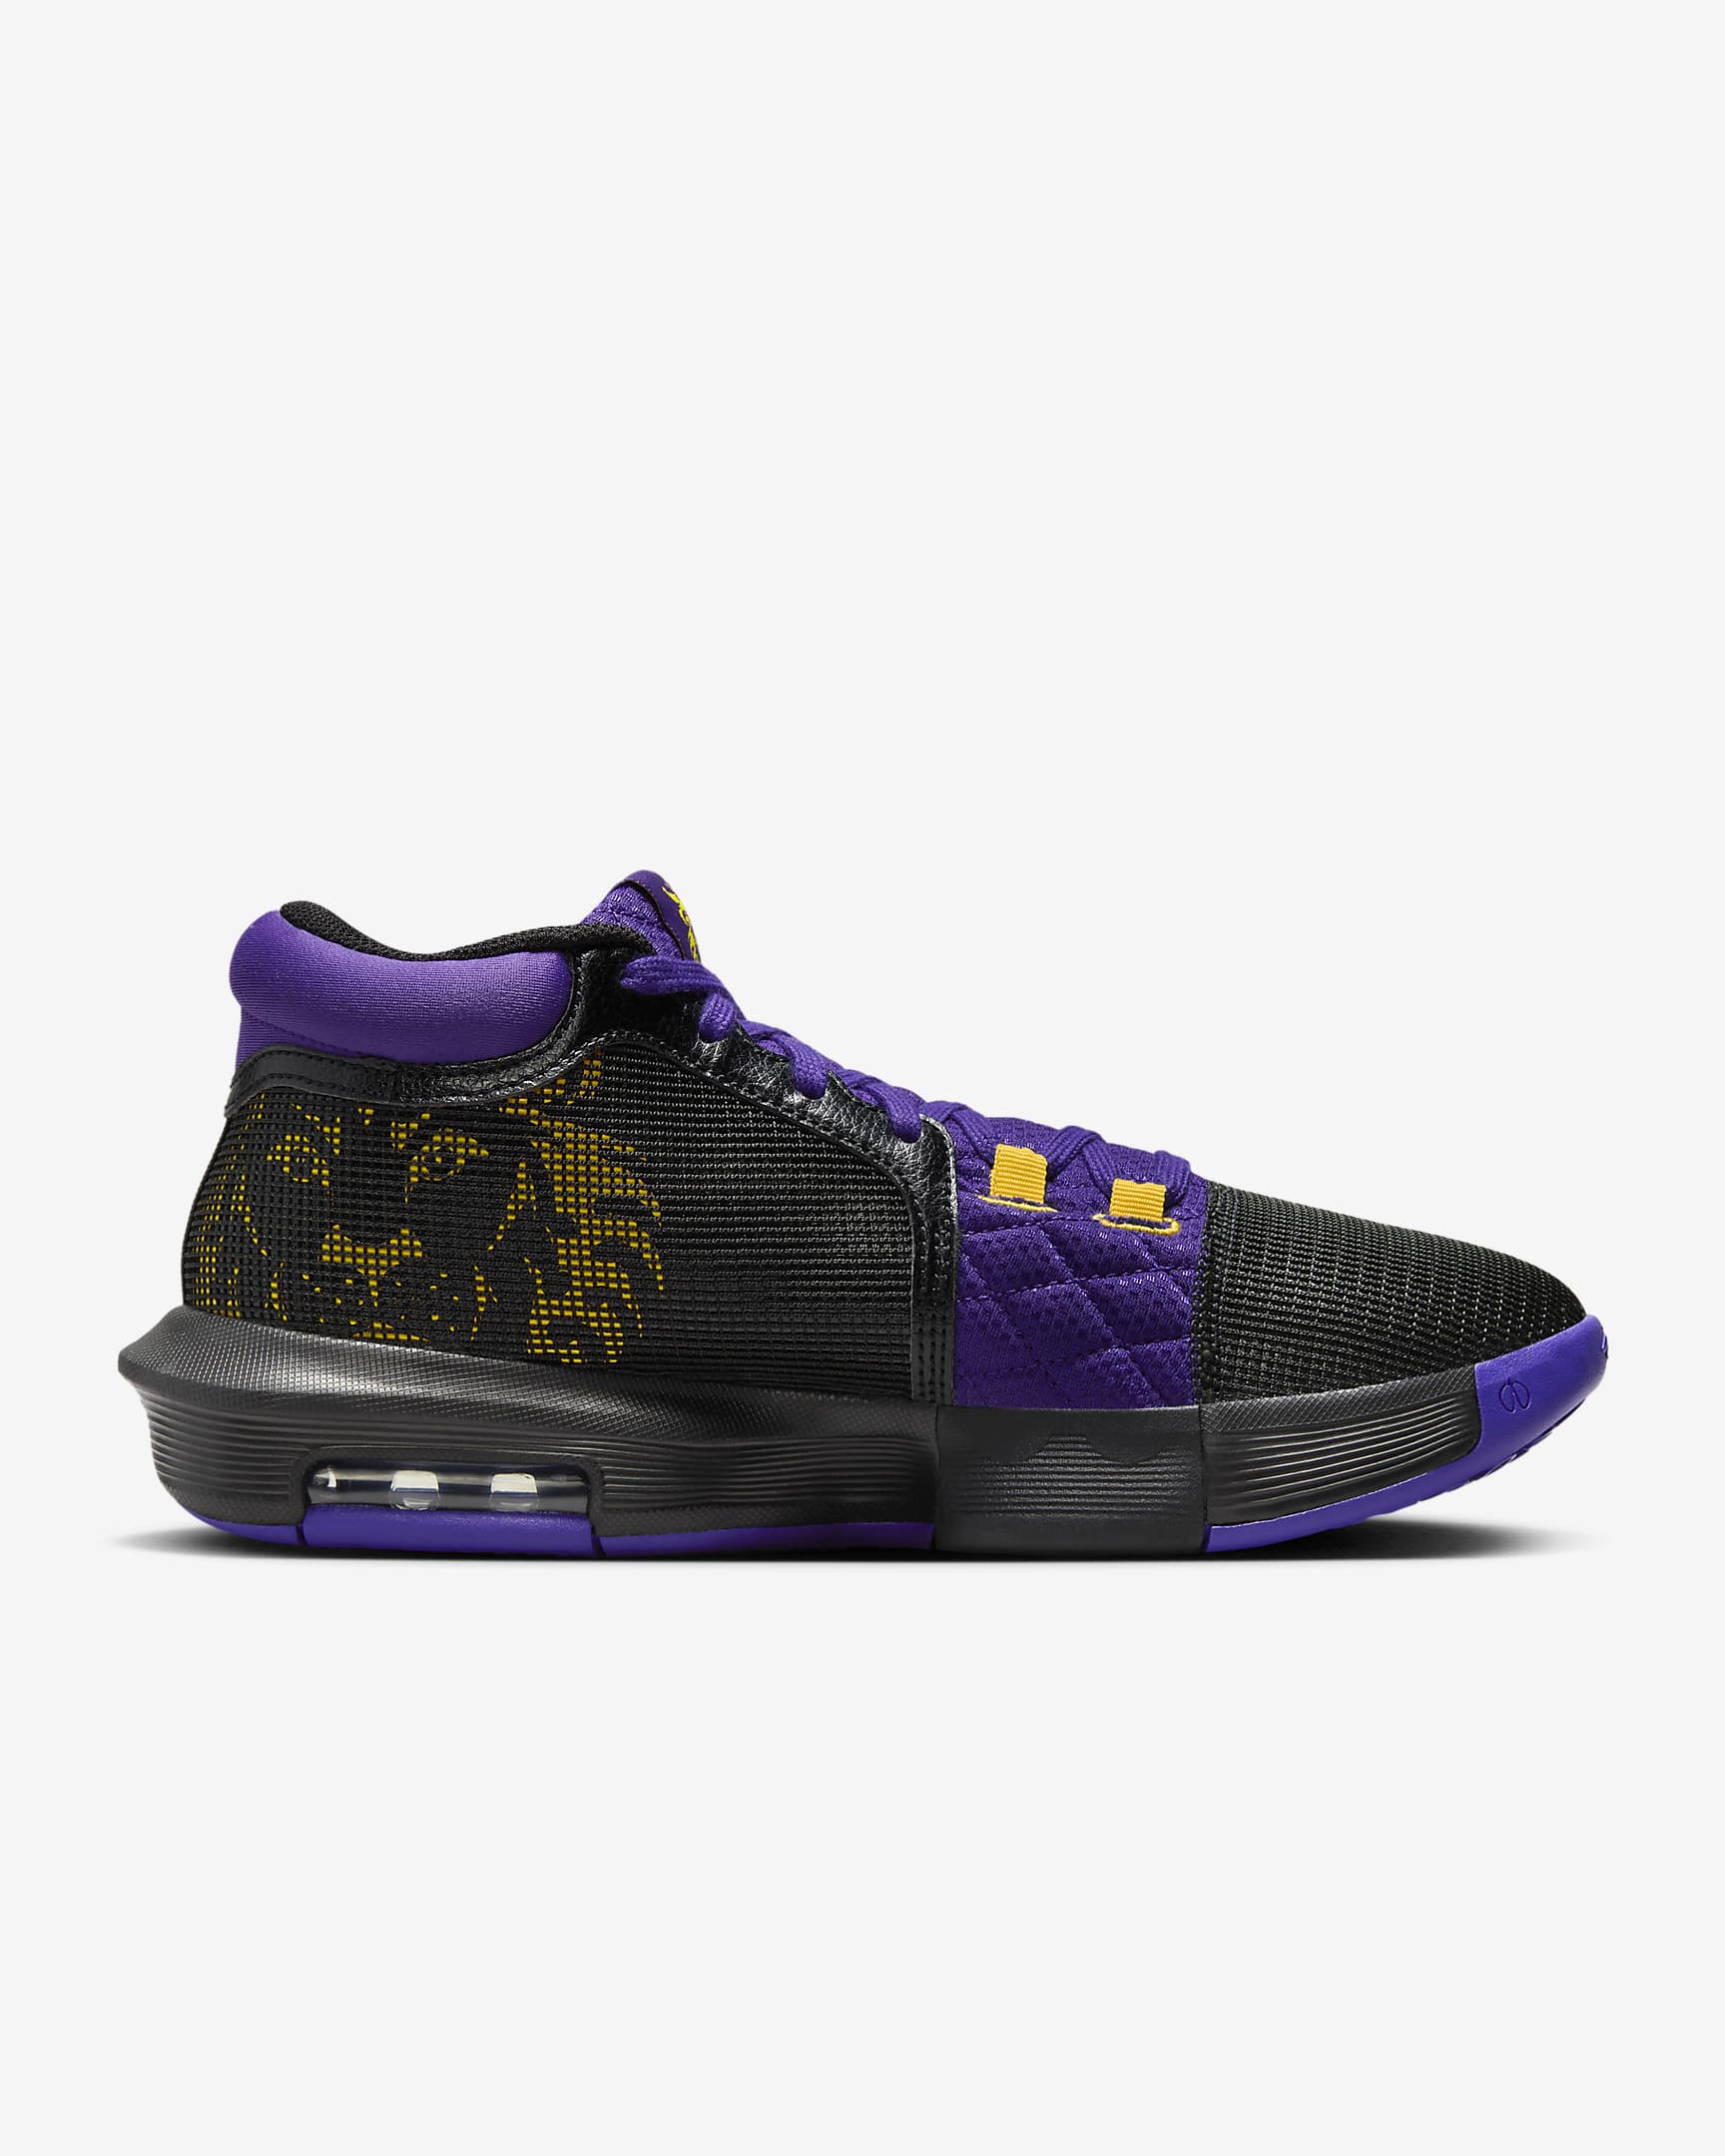 LeBron Witness 8 Basketball Shoes - Black/Field Purple/University Gold